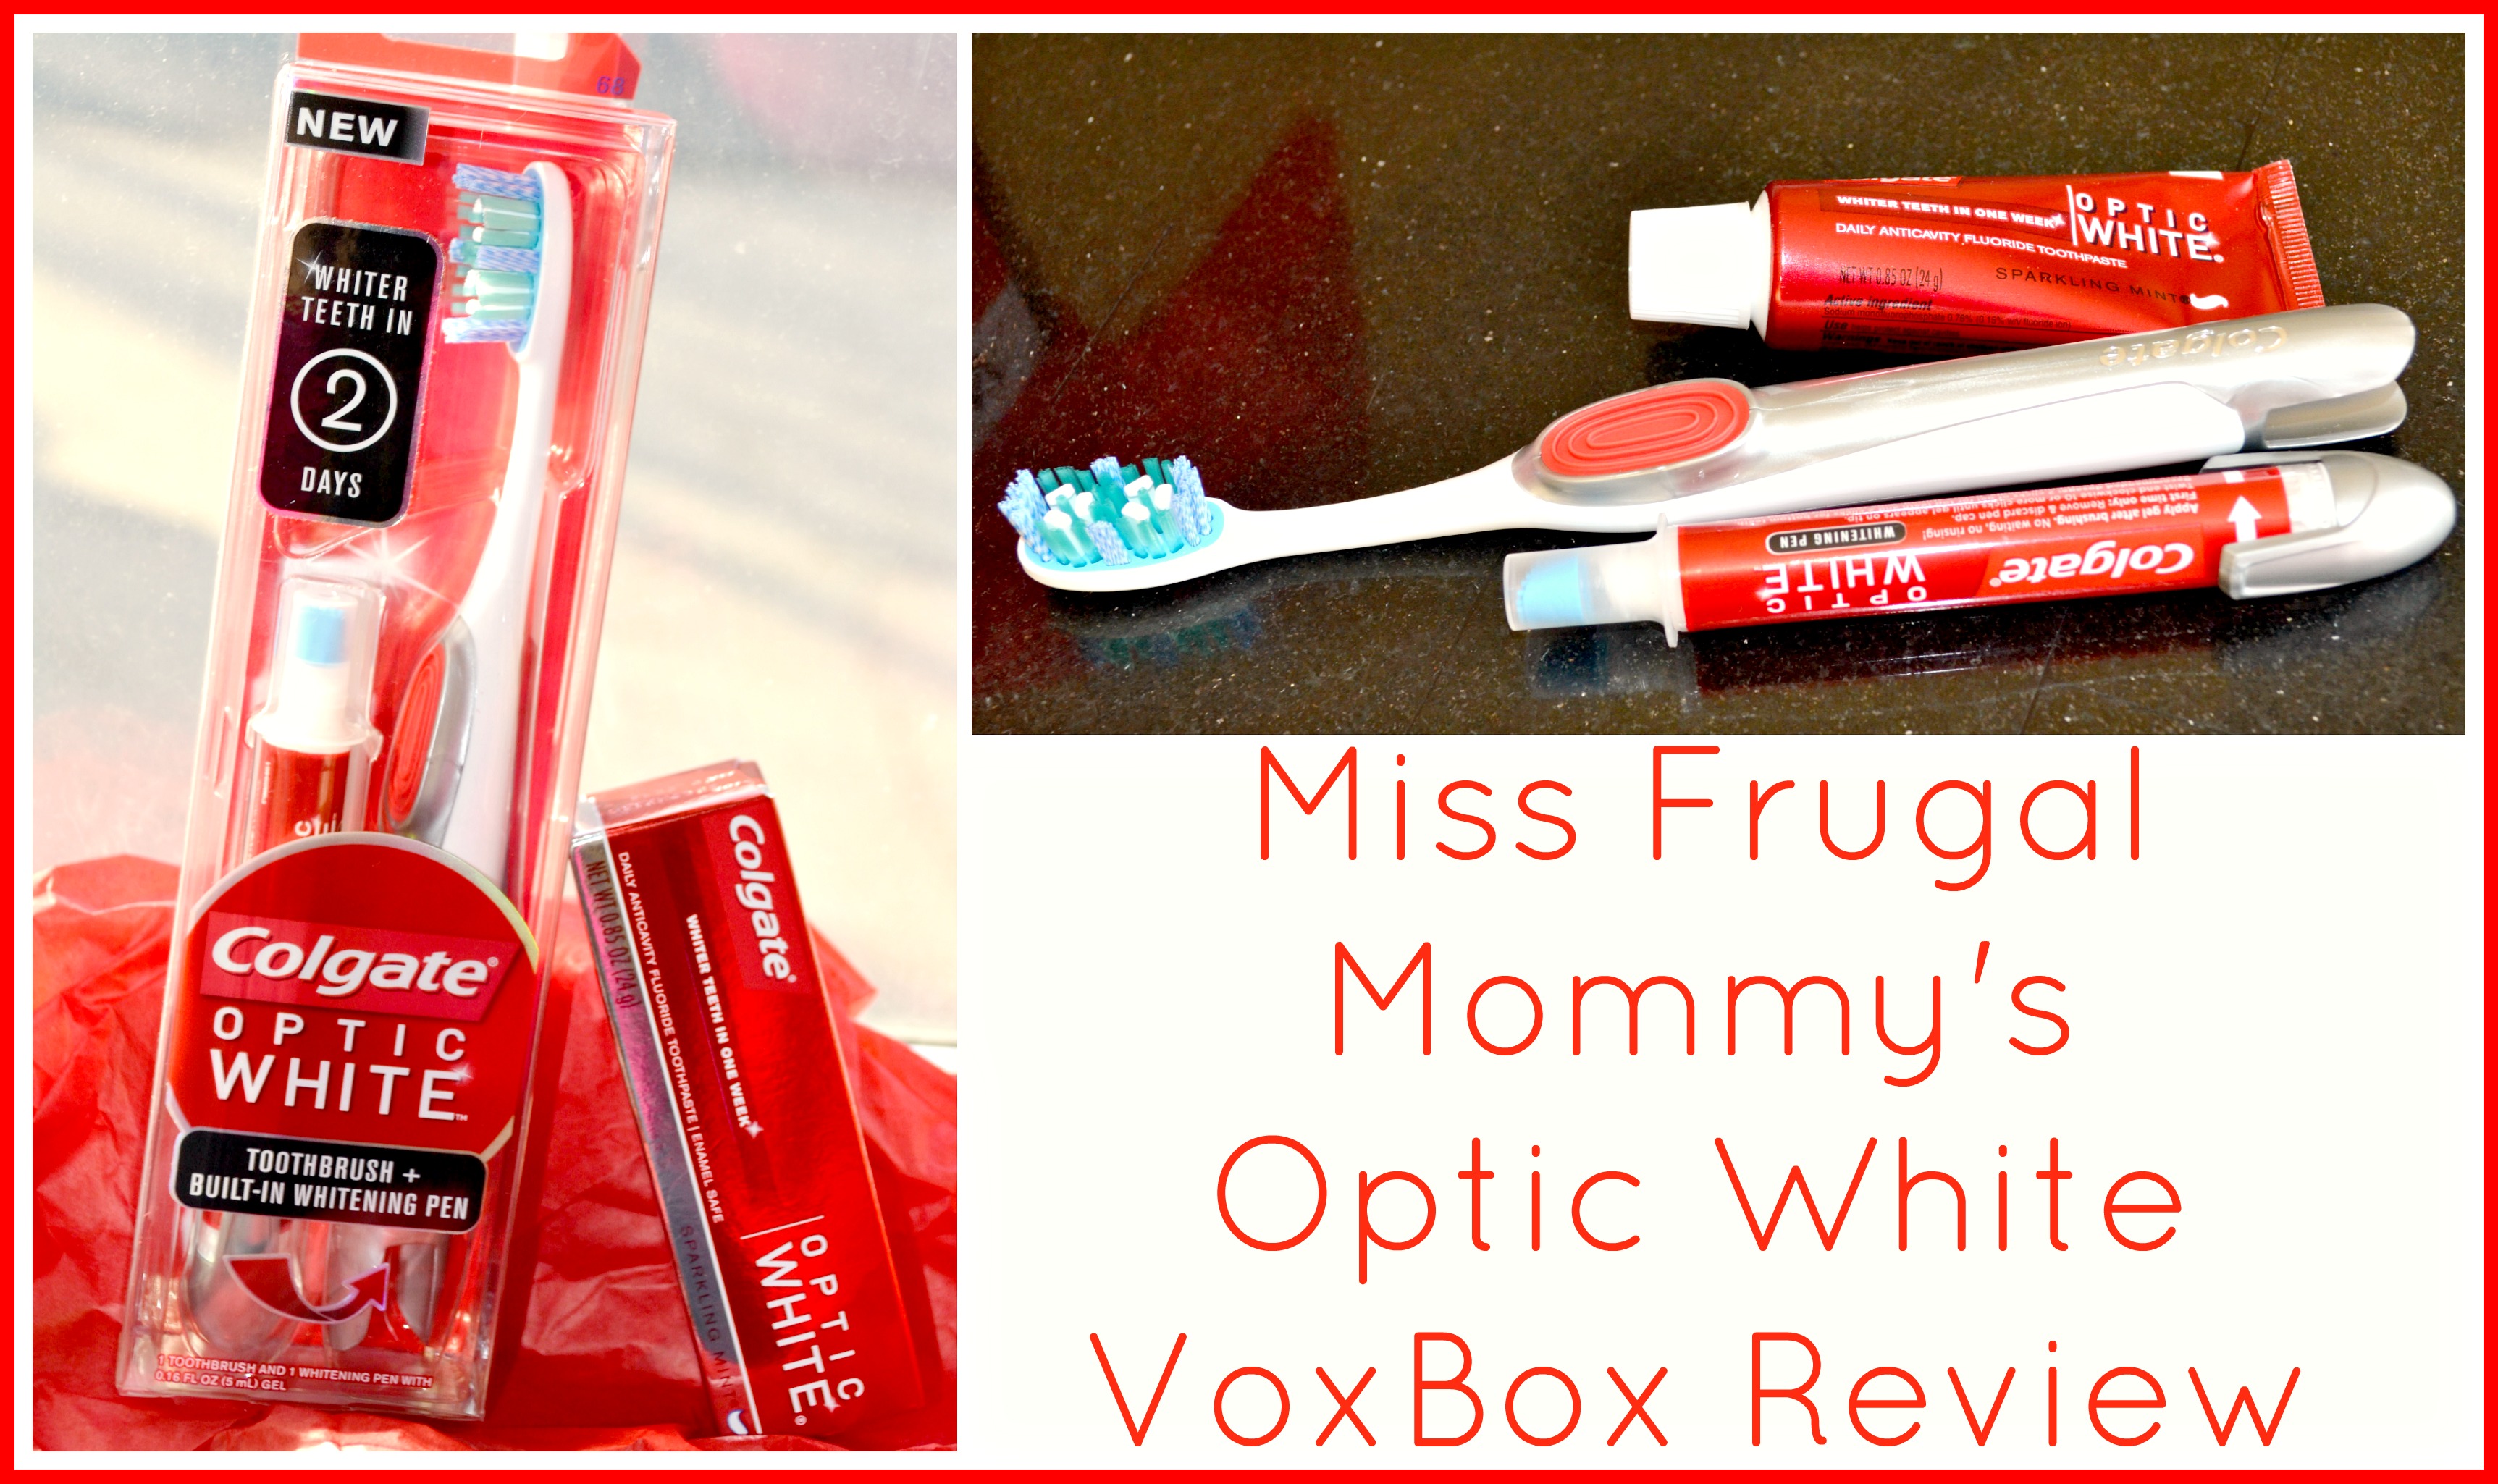 My Colgate Optic White VoxBox Review